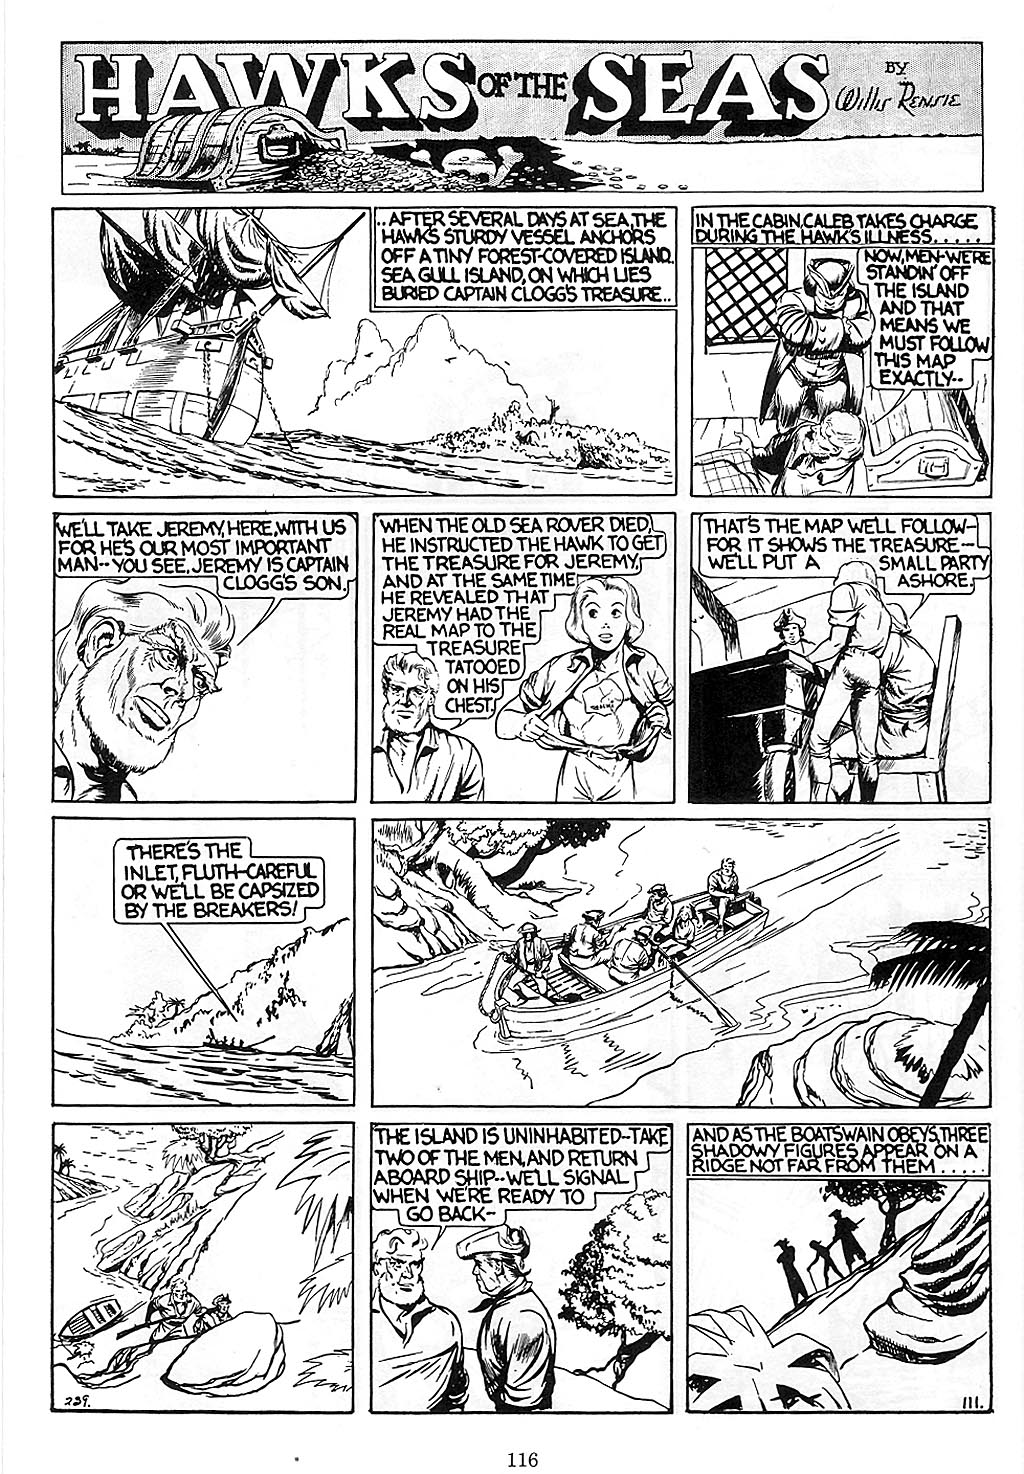 Read online Will Eisner's Hawks of the Seas comic -  Issue # TPB - 117